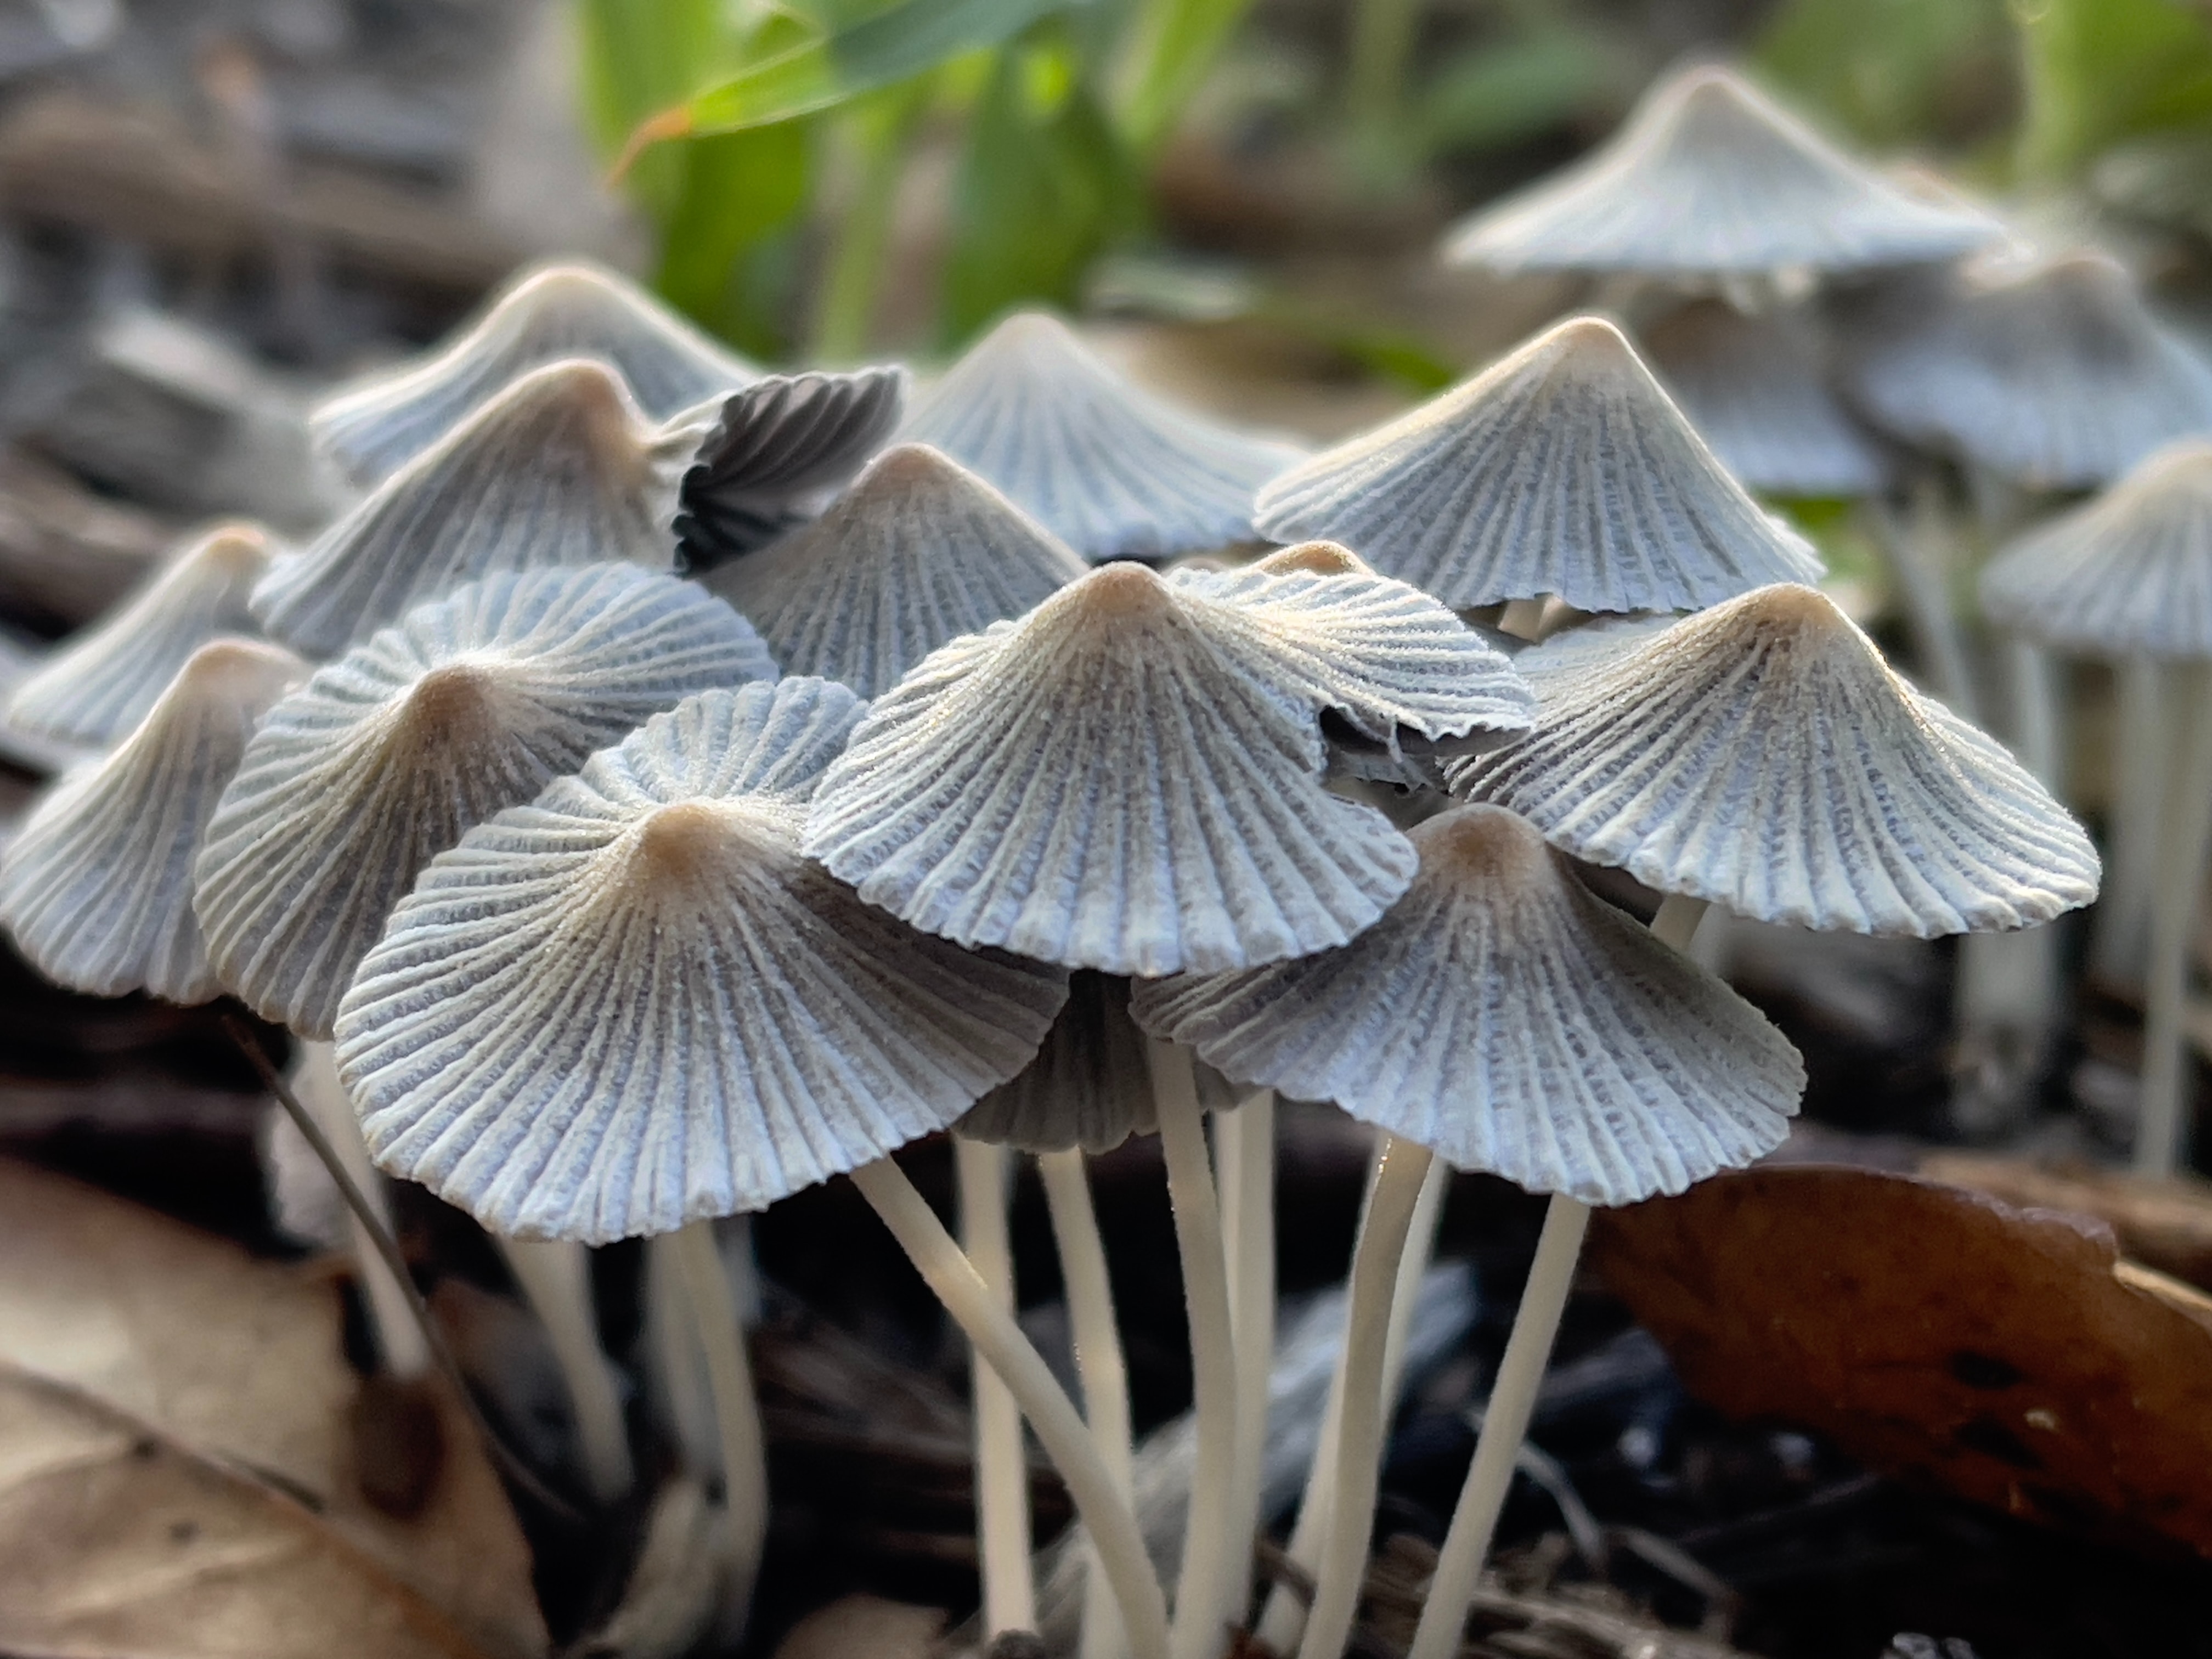 Do mushroom supplements increase estrogen?